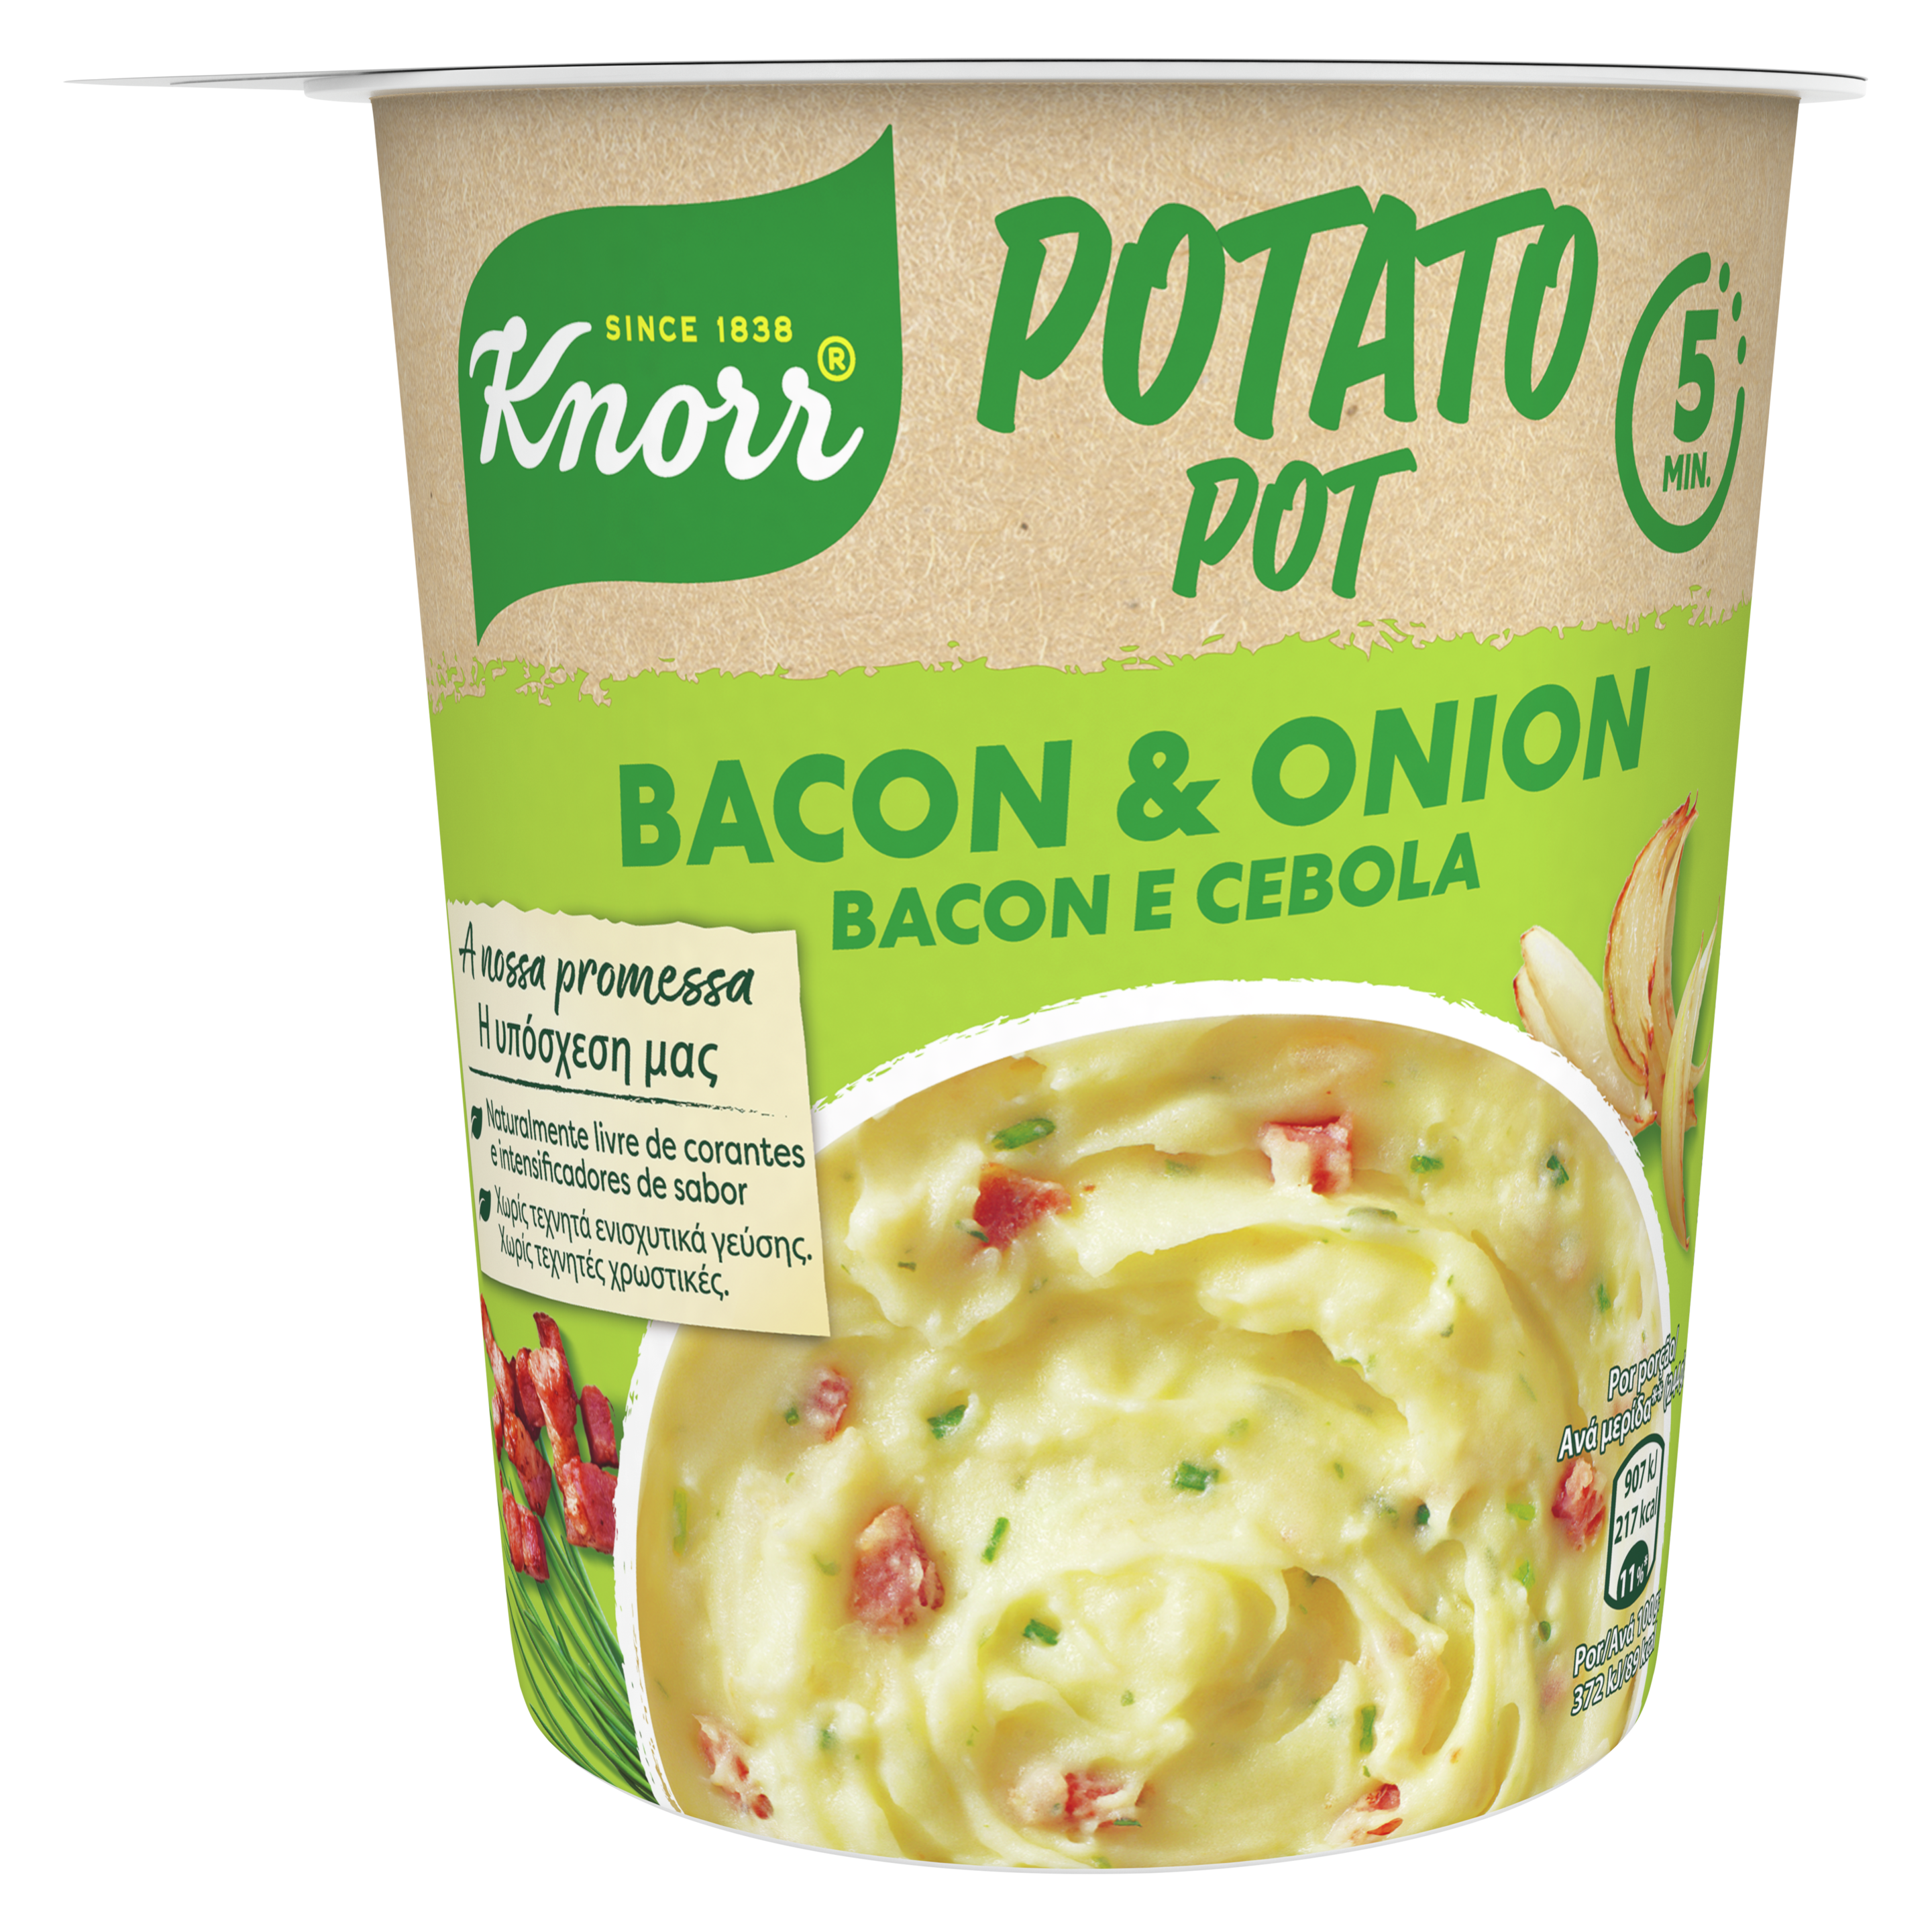 Knorr Potato Pot Bacon & Onion